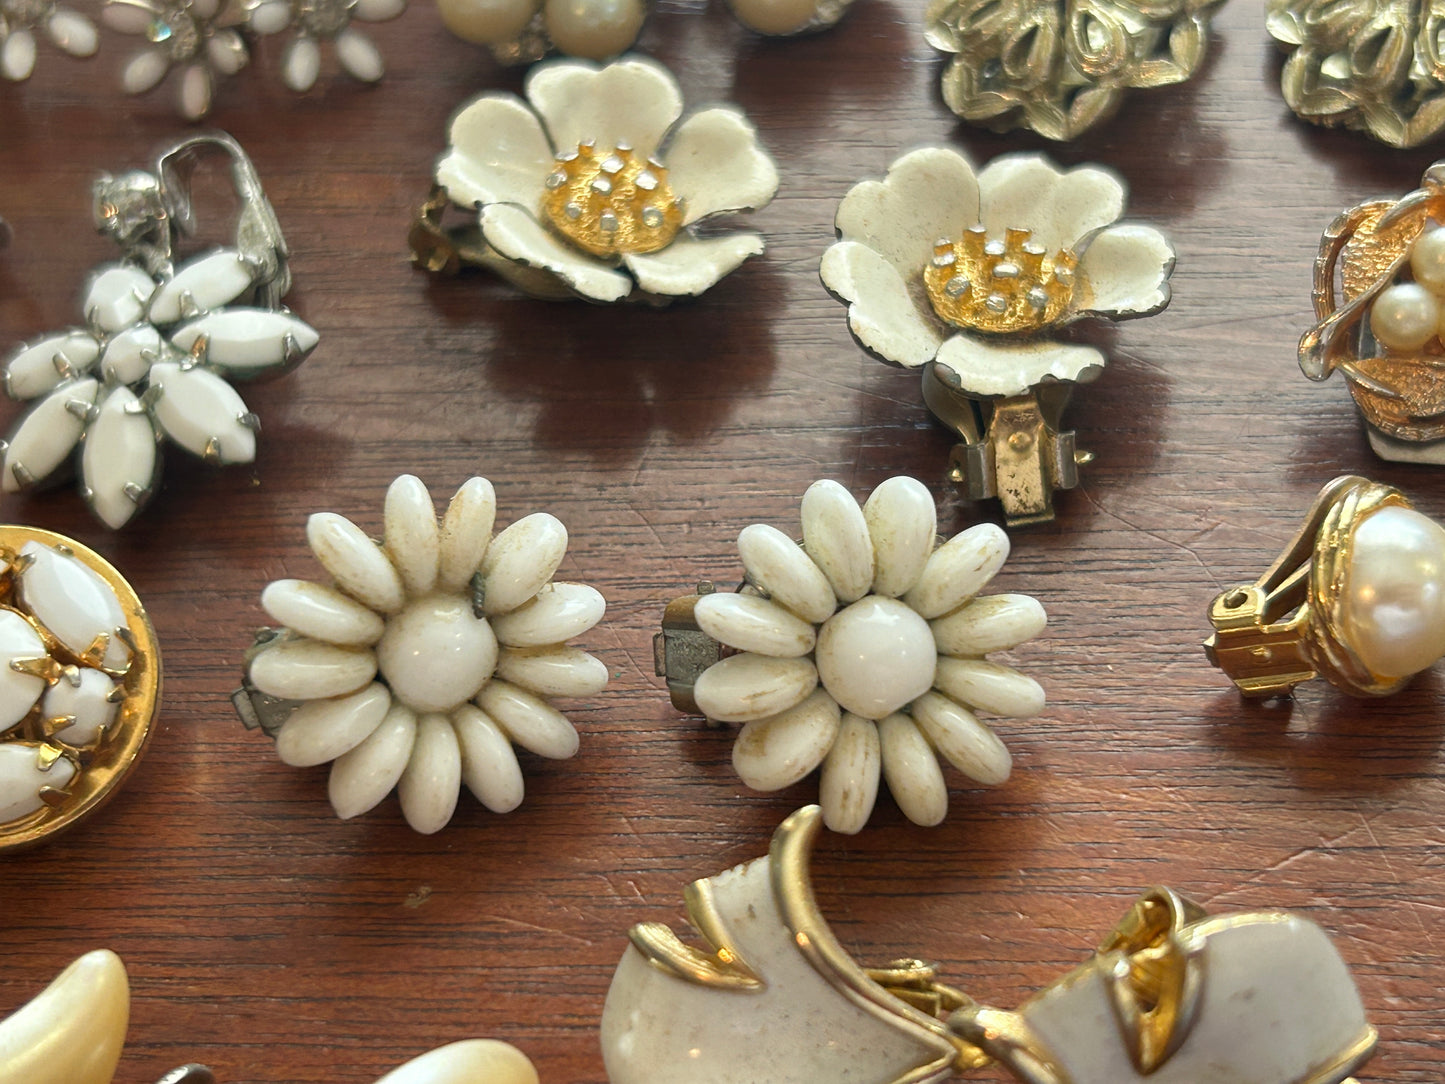 Vintage Clip On Earrings Lot Glass Beads Cluster Enamel Faux Pearl & More